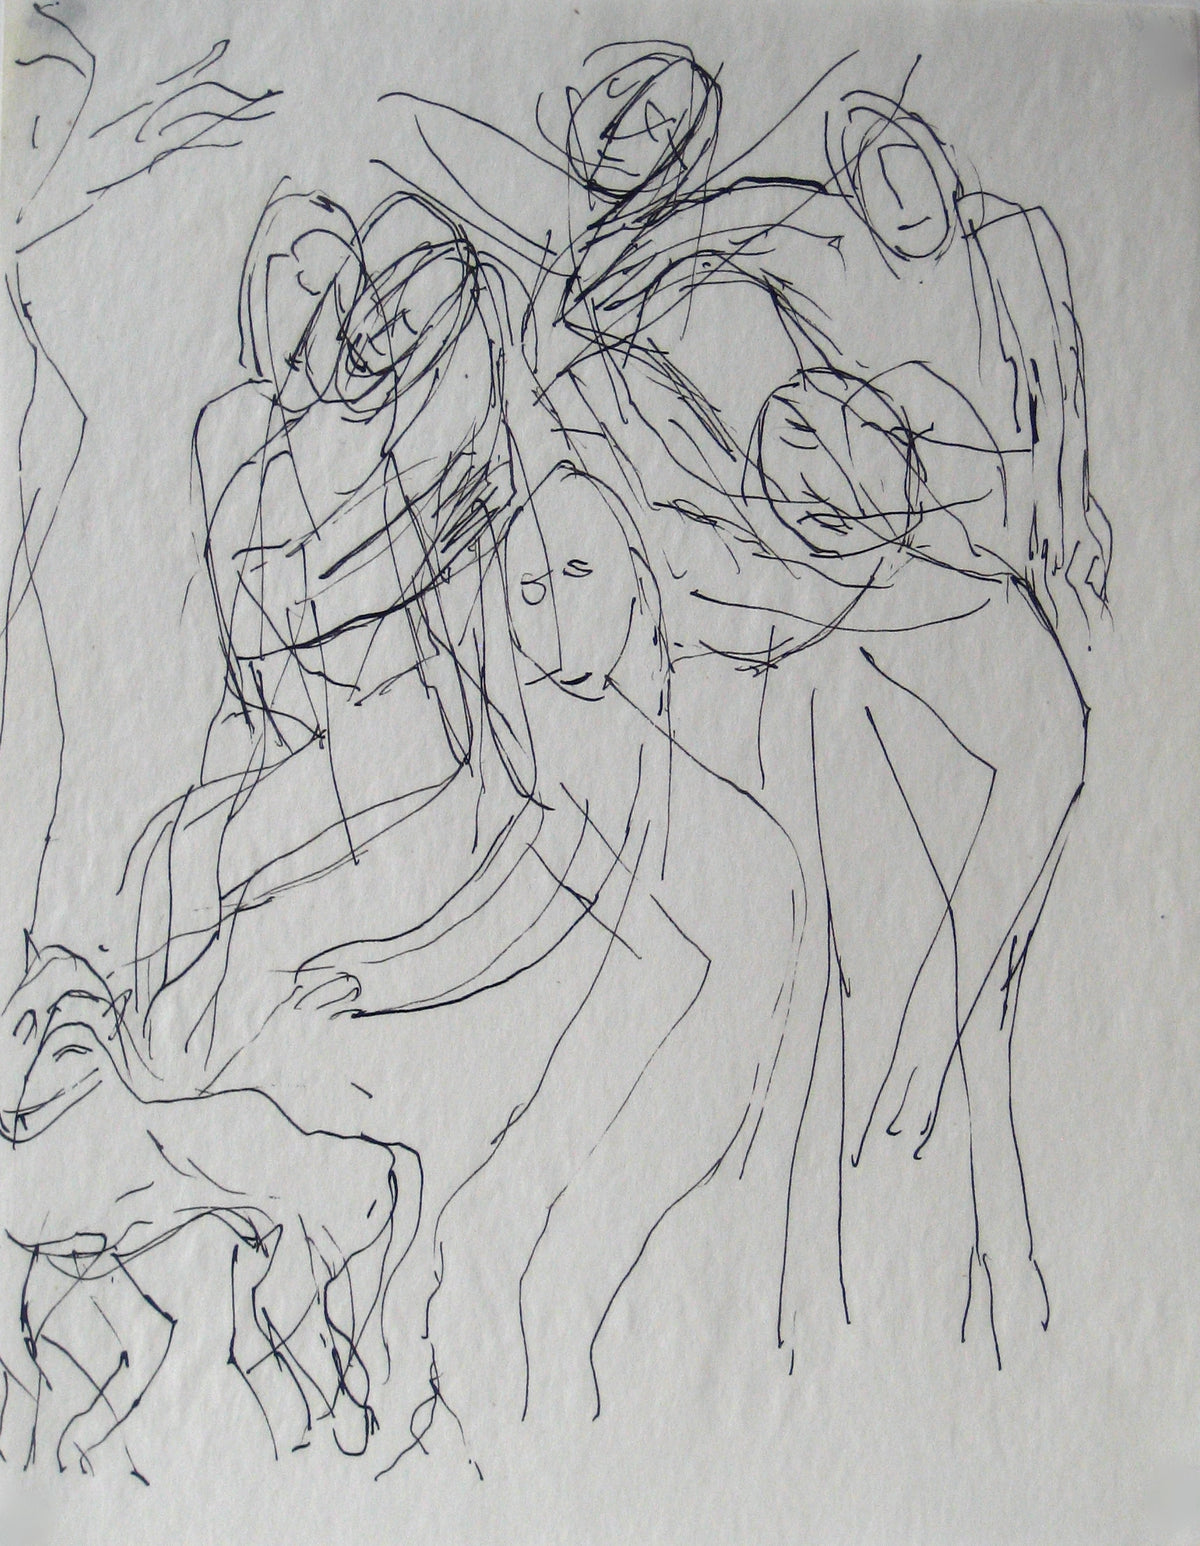 Sketch of Figures in a Scene &lt;br&gt;Early-Mid 20th Century Ink on Paper &lt;br&gt;&lt;br&gt;#13601